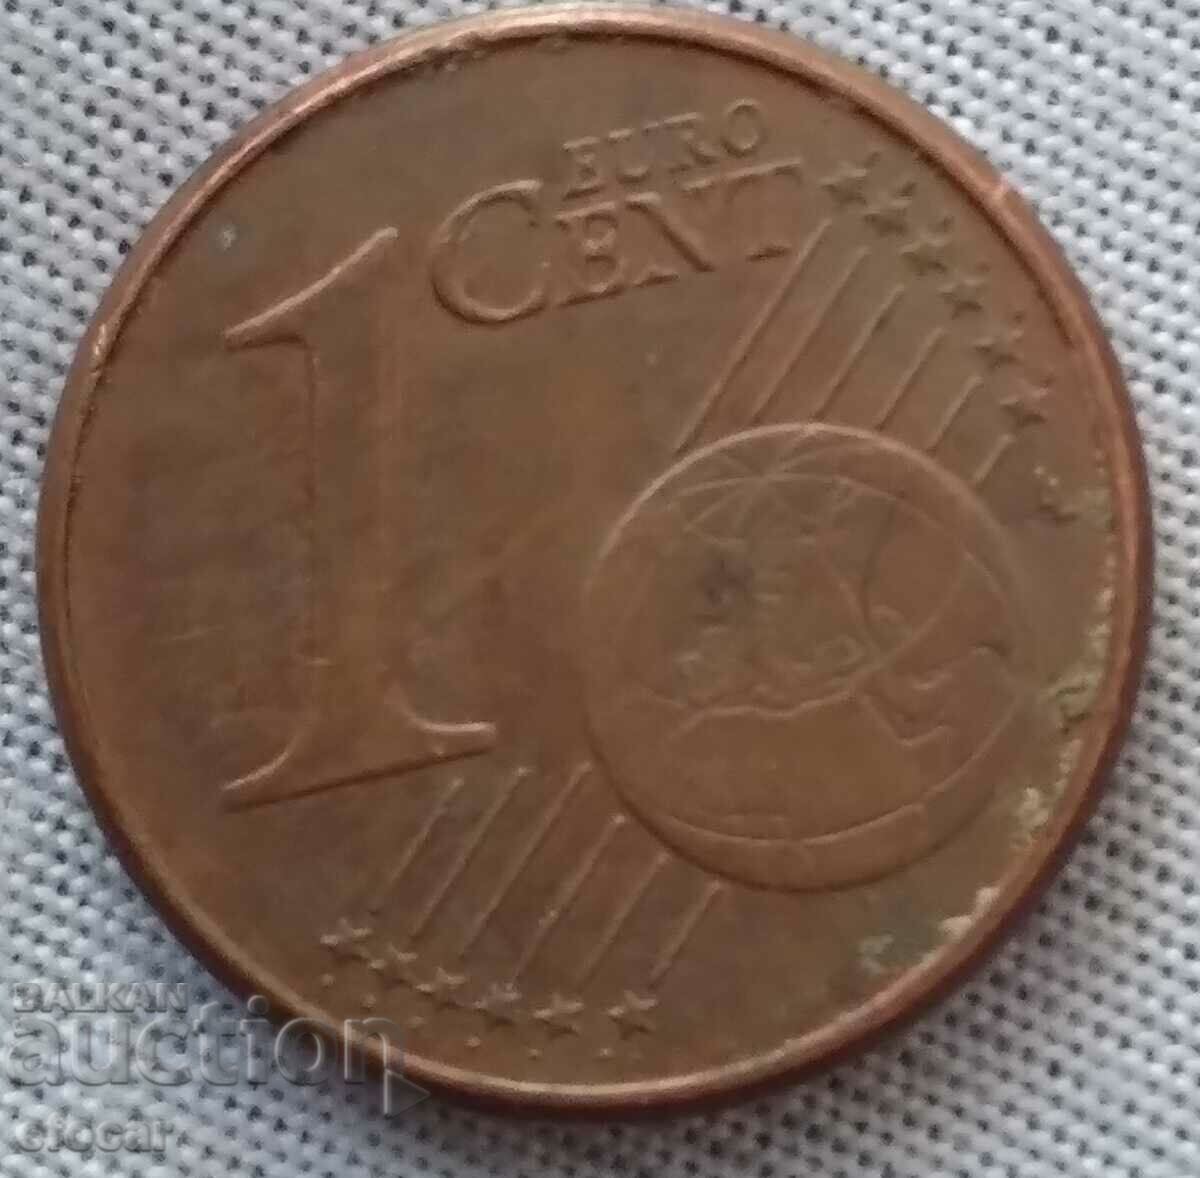 1 cent Germania 2009 începând de la 0,01 cent